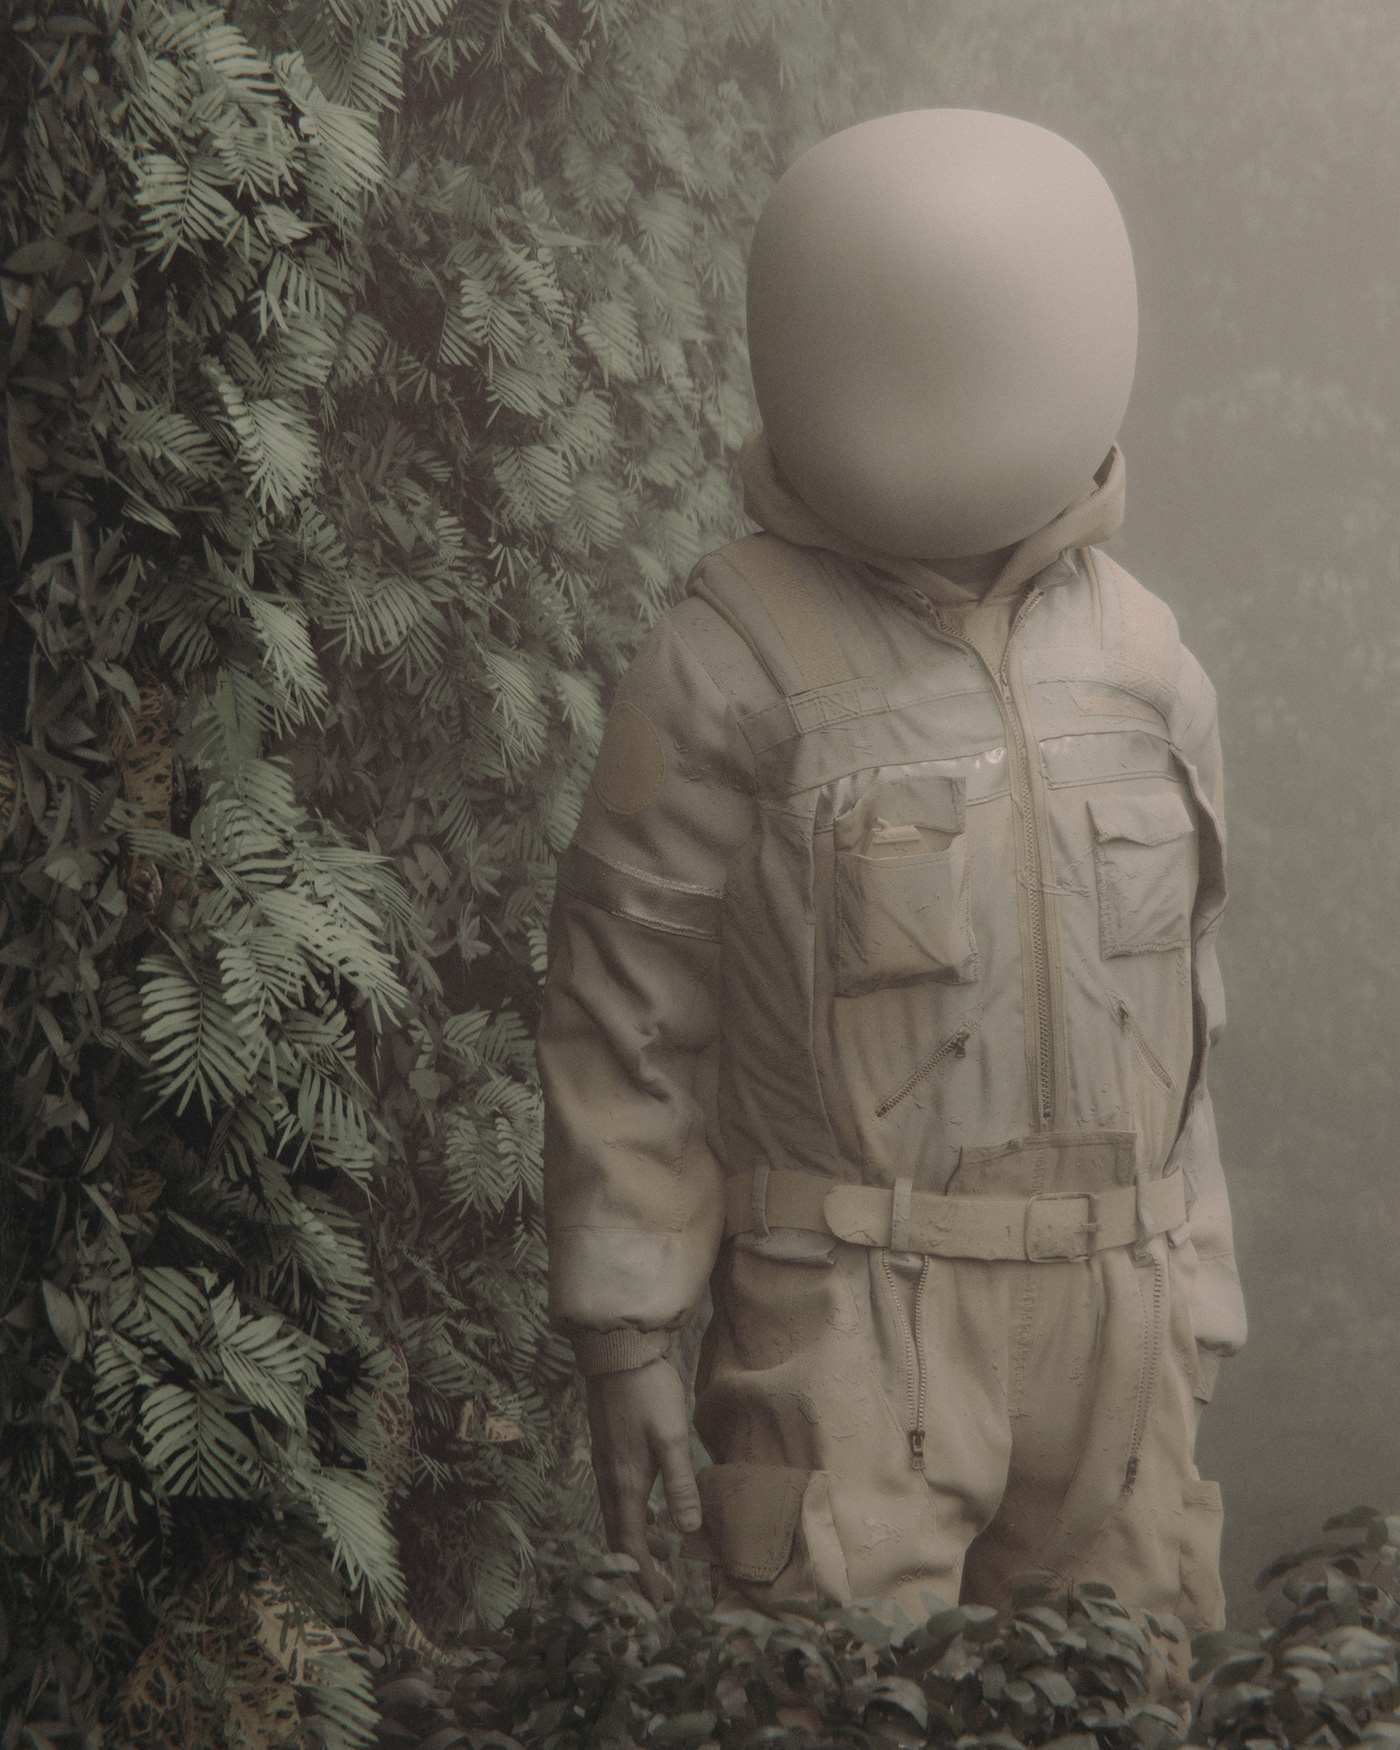 dark mood lighting surreal fog dream 3D Render Digital Art  art